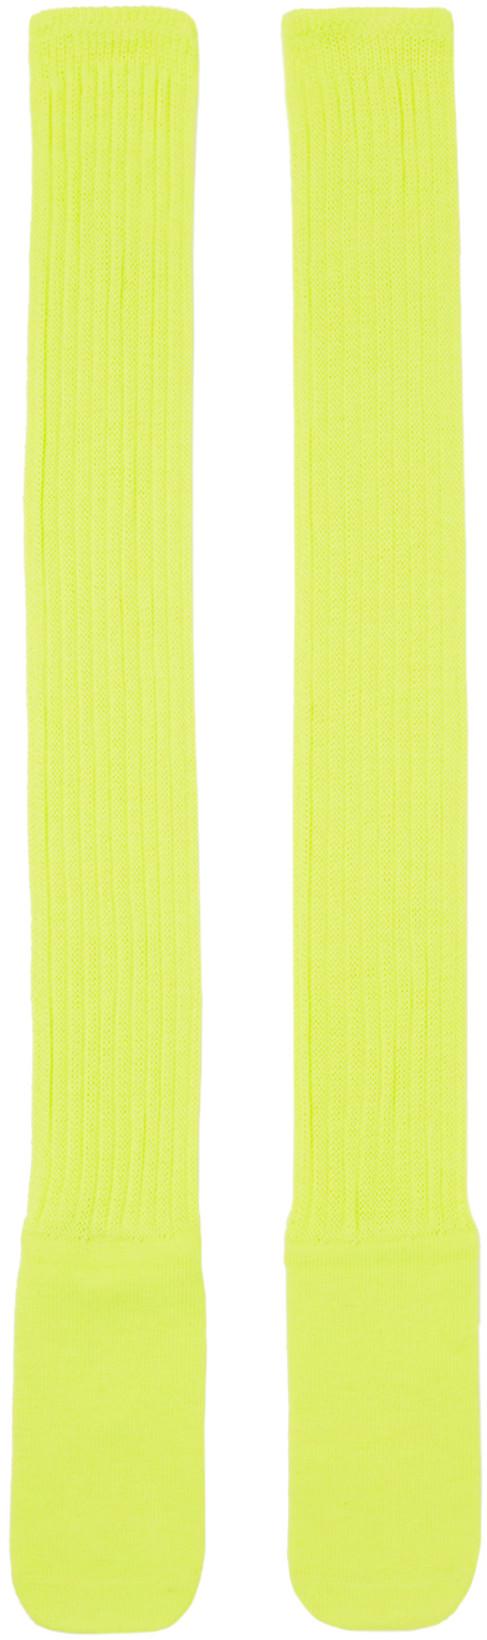 Yellow Fluo Socks by BERNHARD WILLHELM